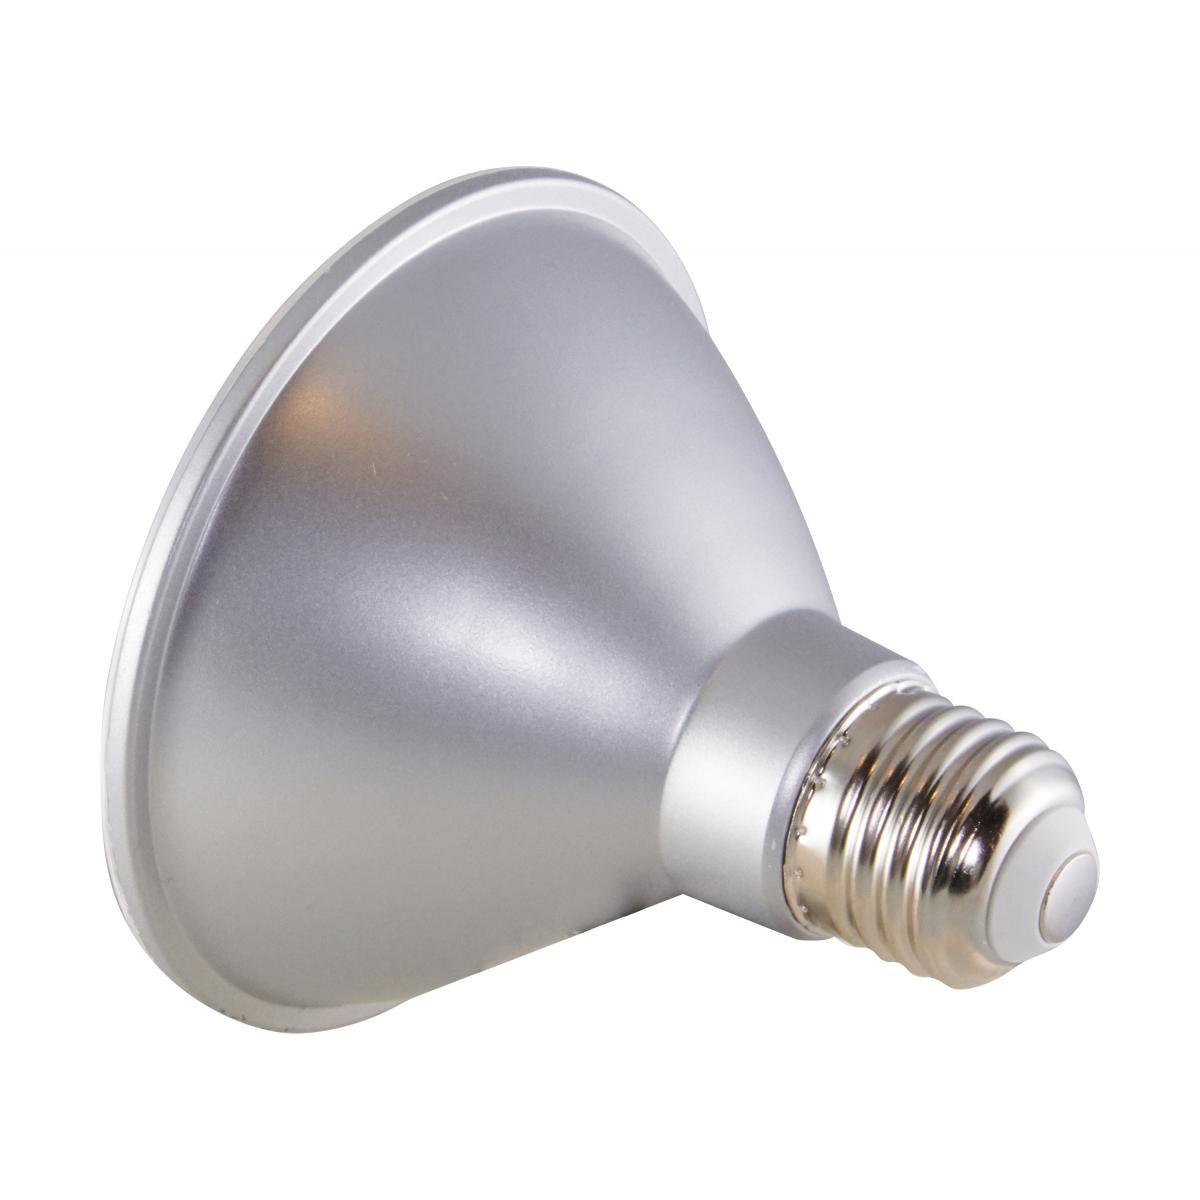 PAR30 Short Neck Reflector LED Bulb, 12 watt, 1000 Lumens, 3500K, E26 Medium Base, 40 Deg. Flood